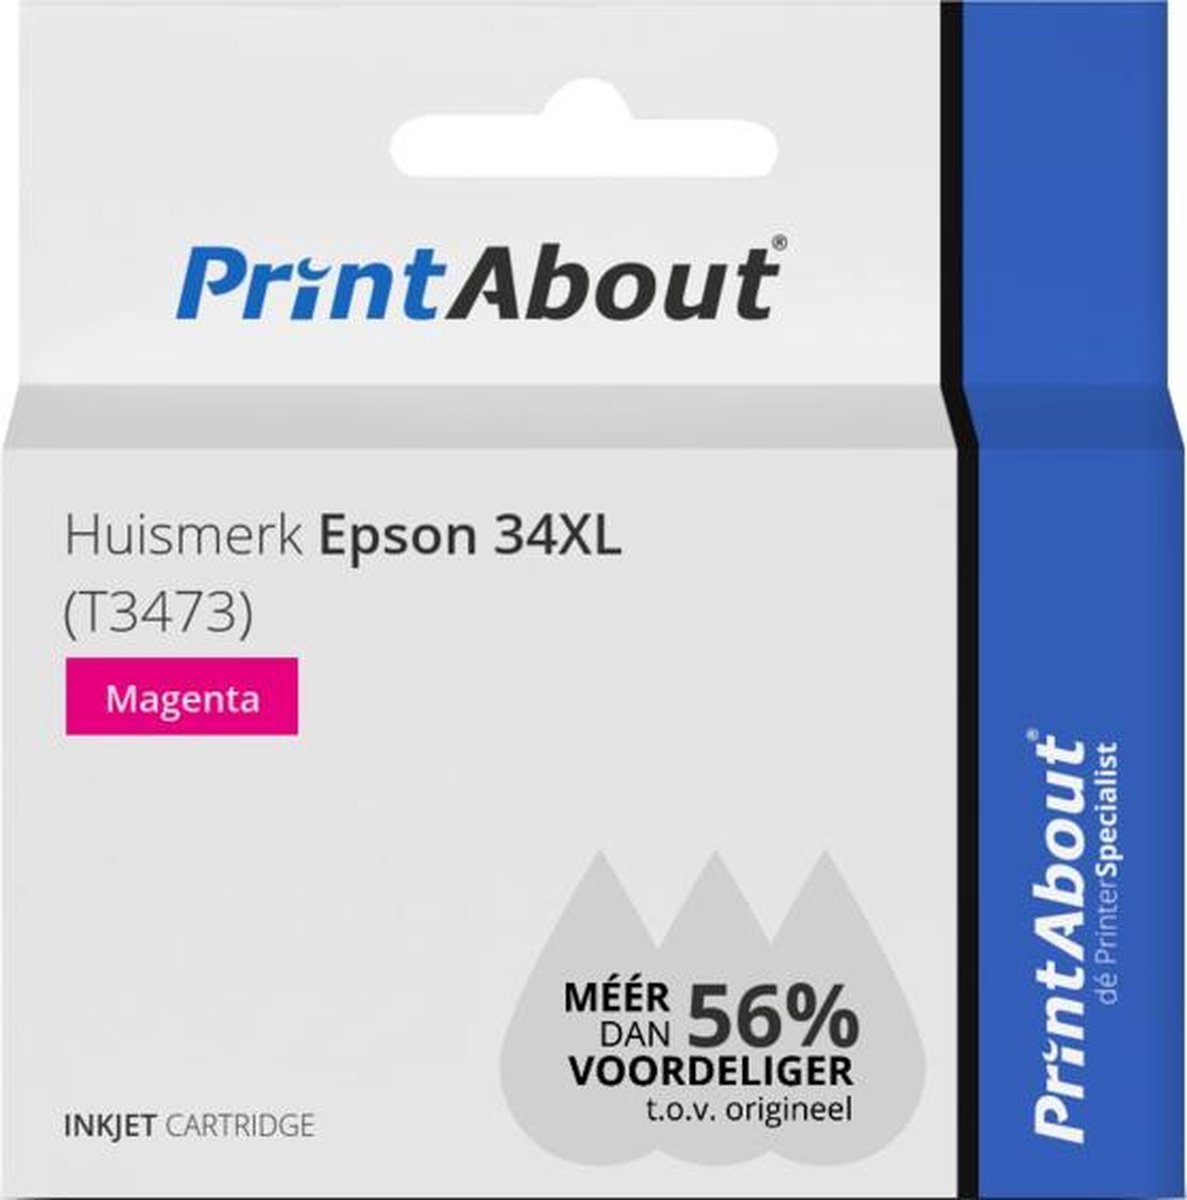 PrintAbout Huismerk Epson 34XL (T3473) Inktcartridge Hoge capaciteit - Magenta